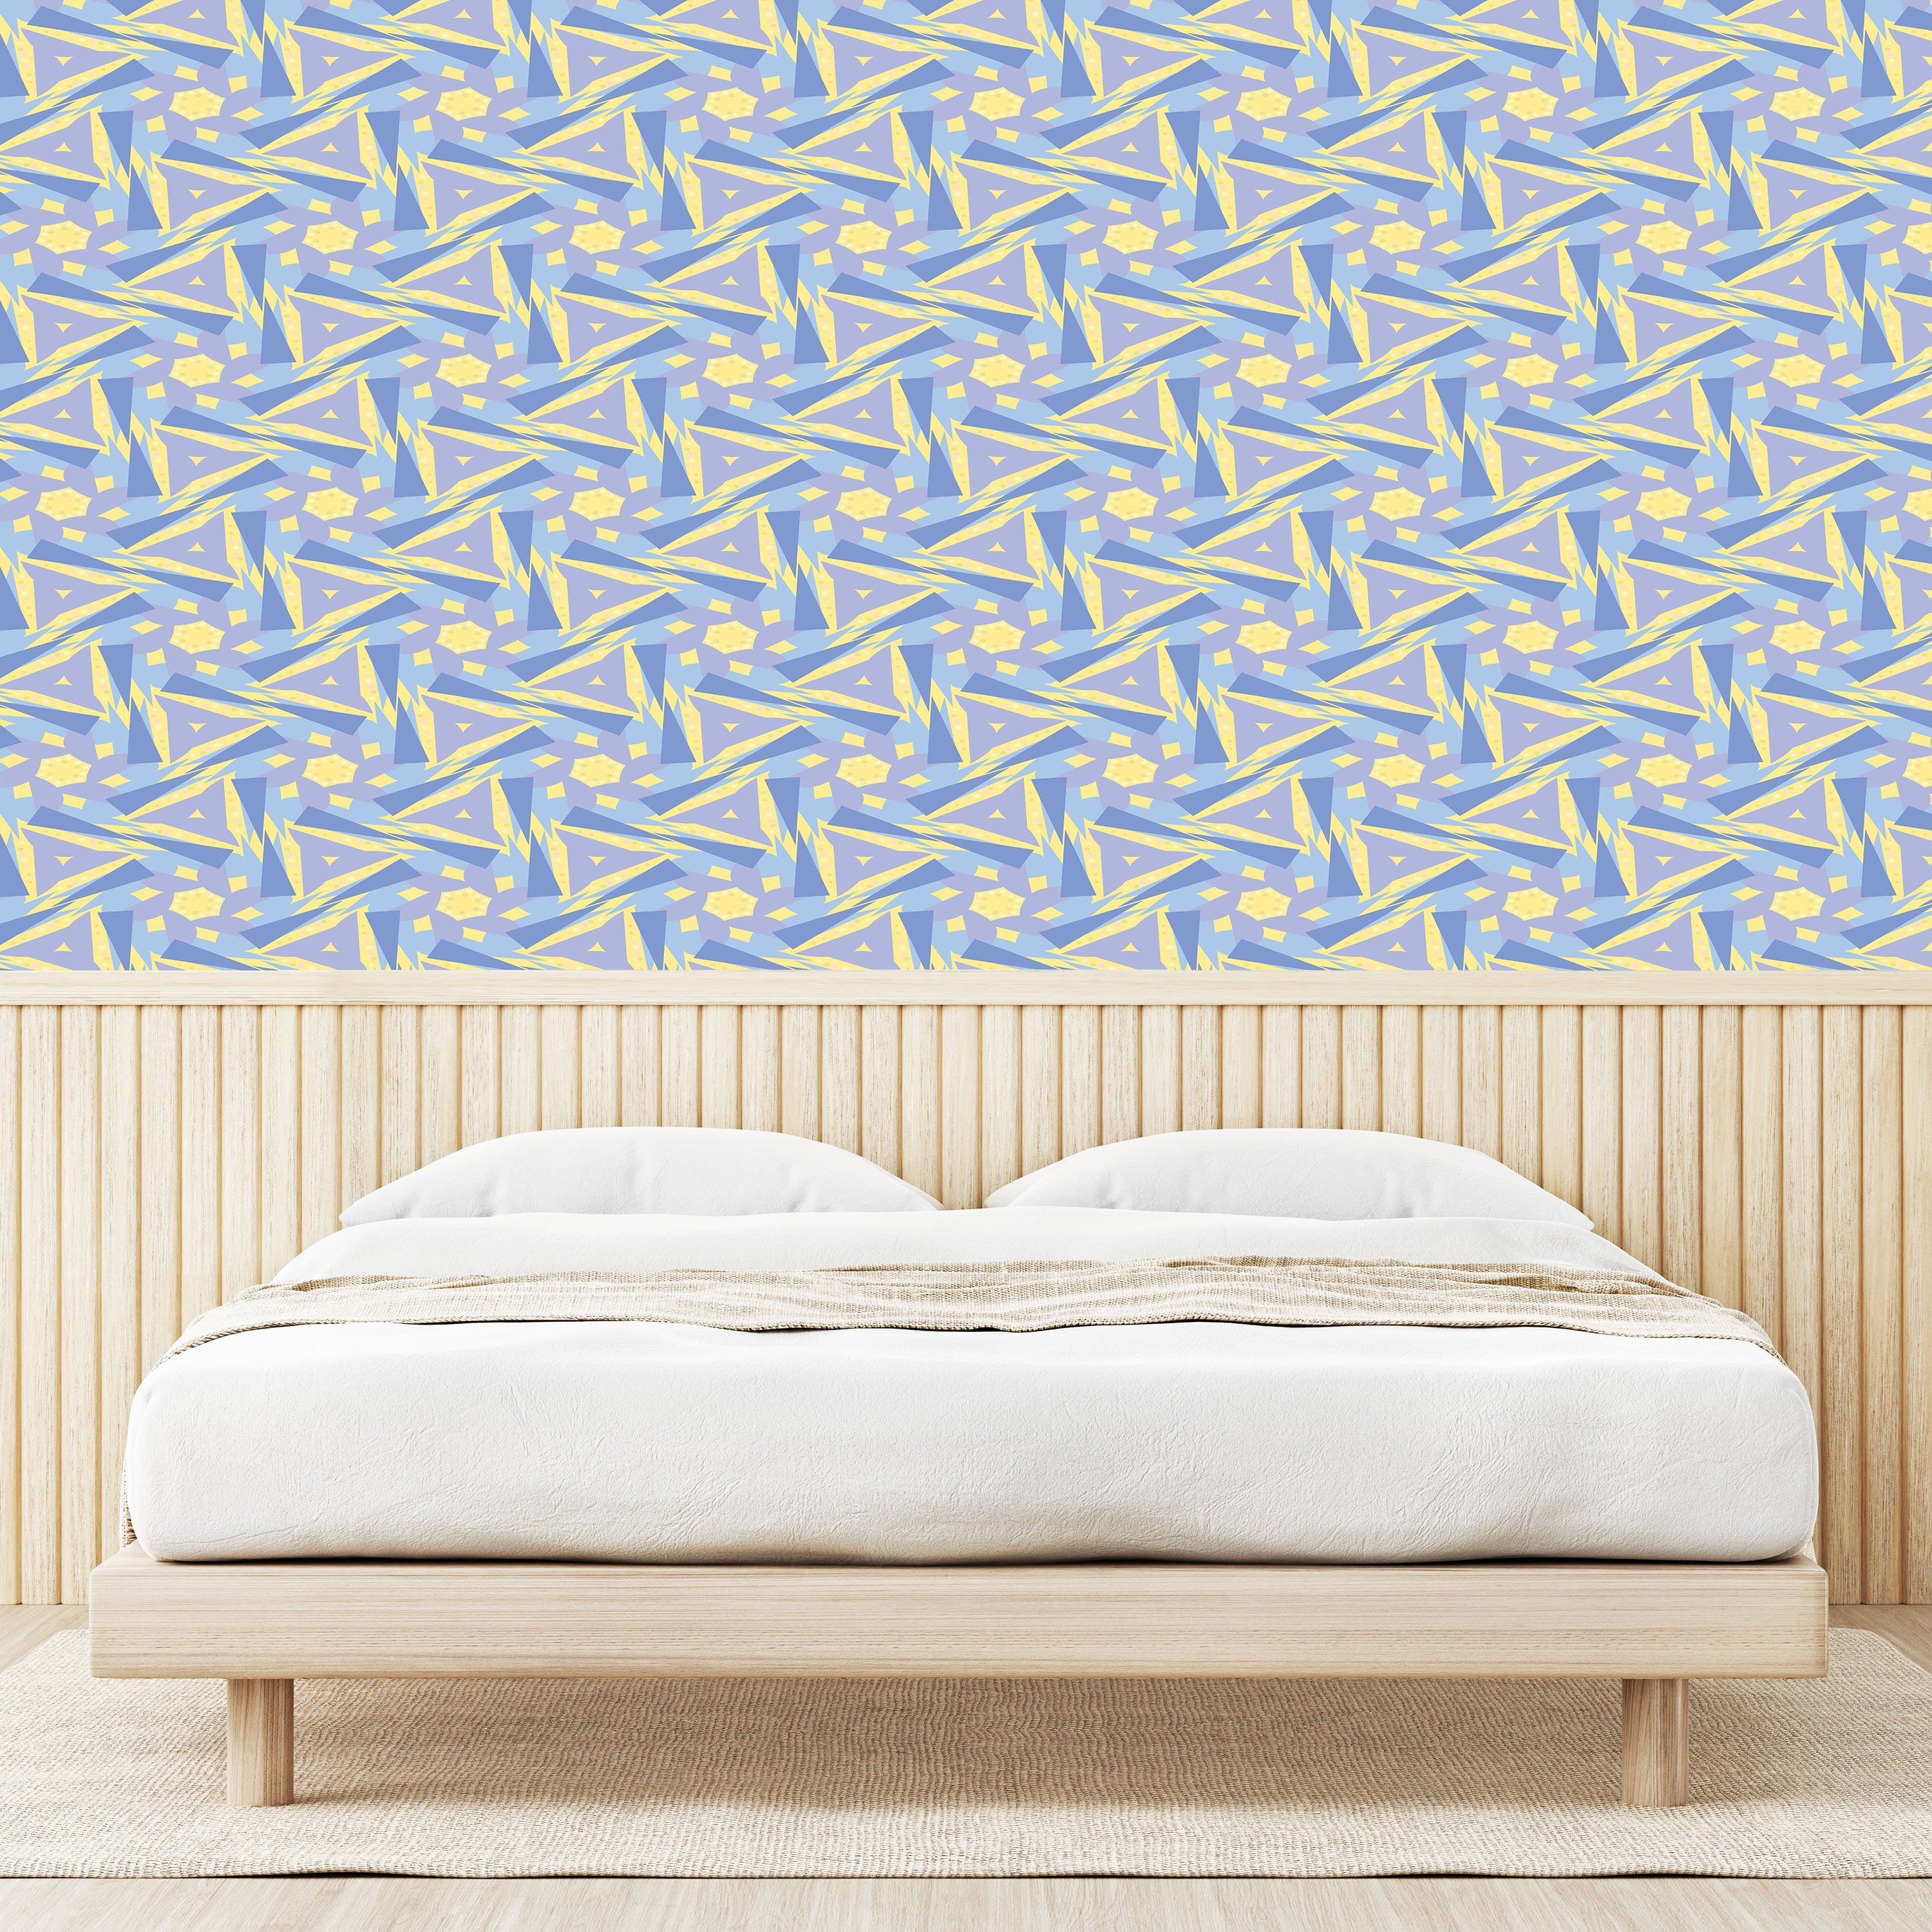 Abakuhaus Vinyltapete selbstklebendes Wohnzimmer Moderne Pastel Polygonen Formen Küchenakzent